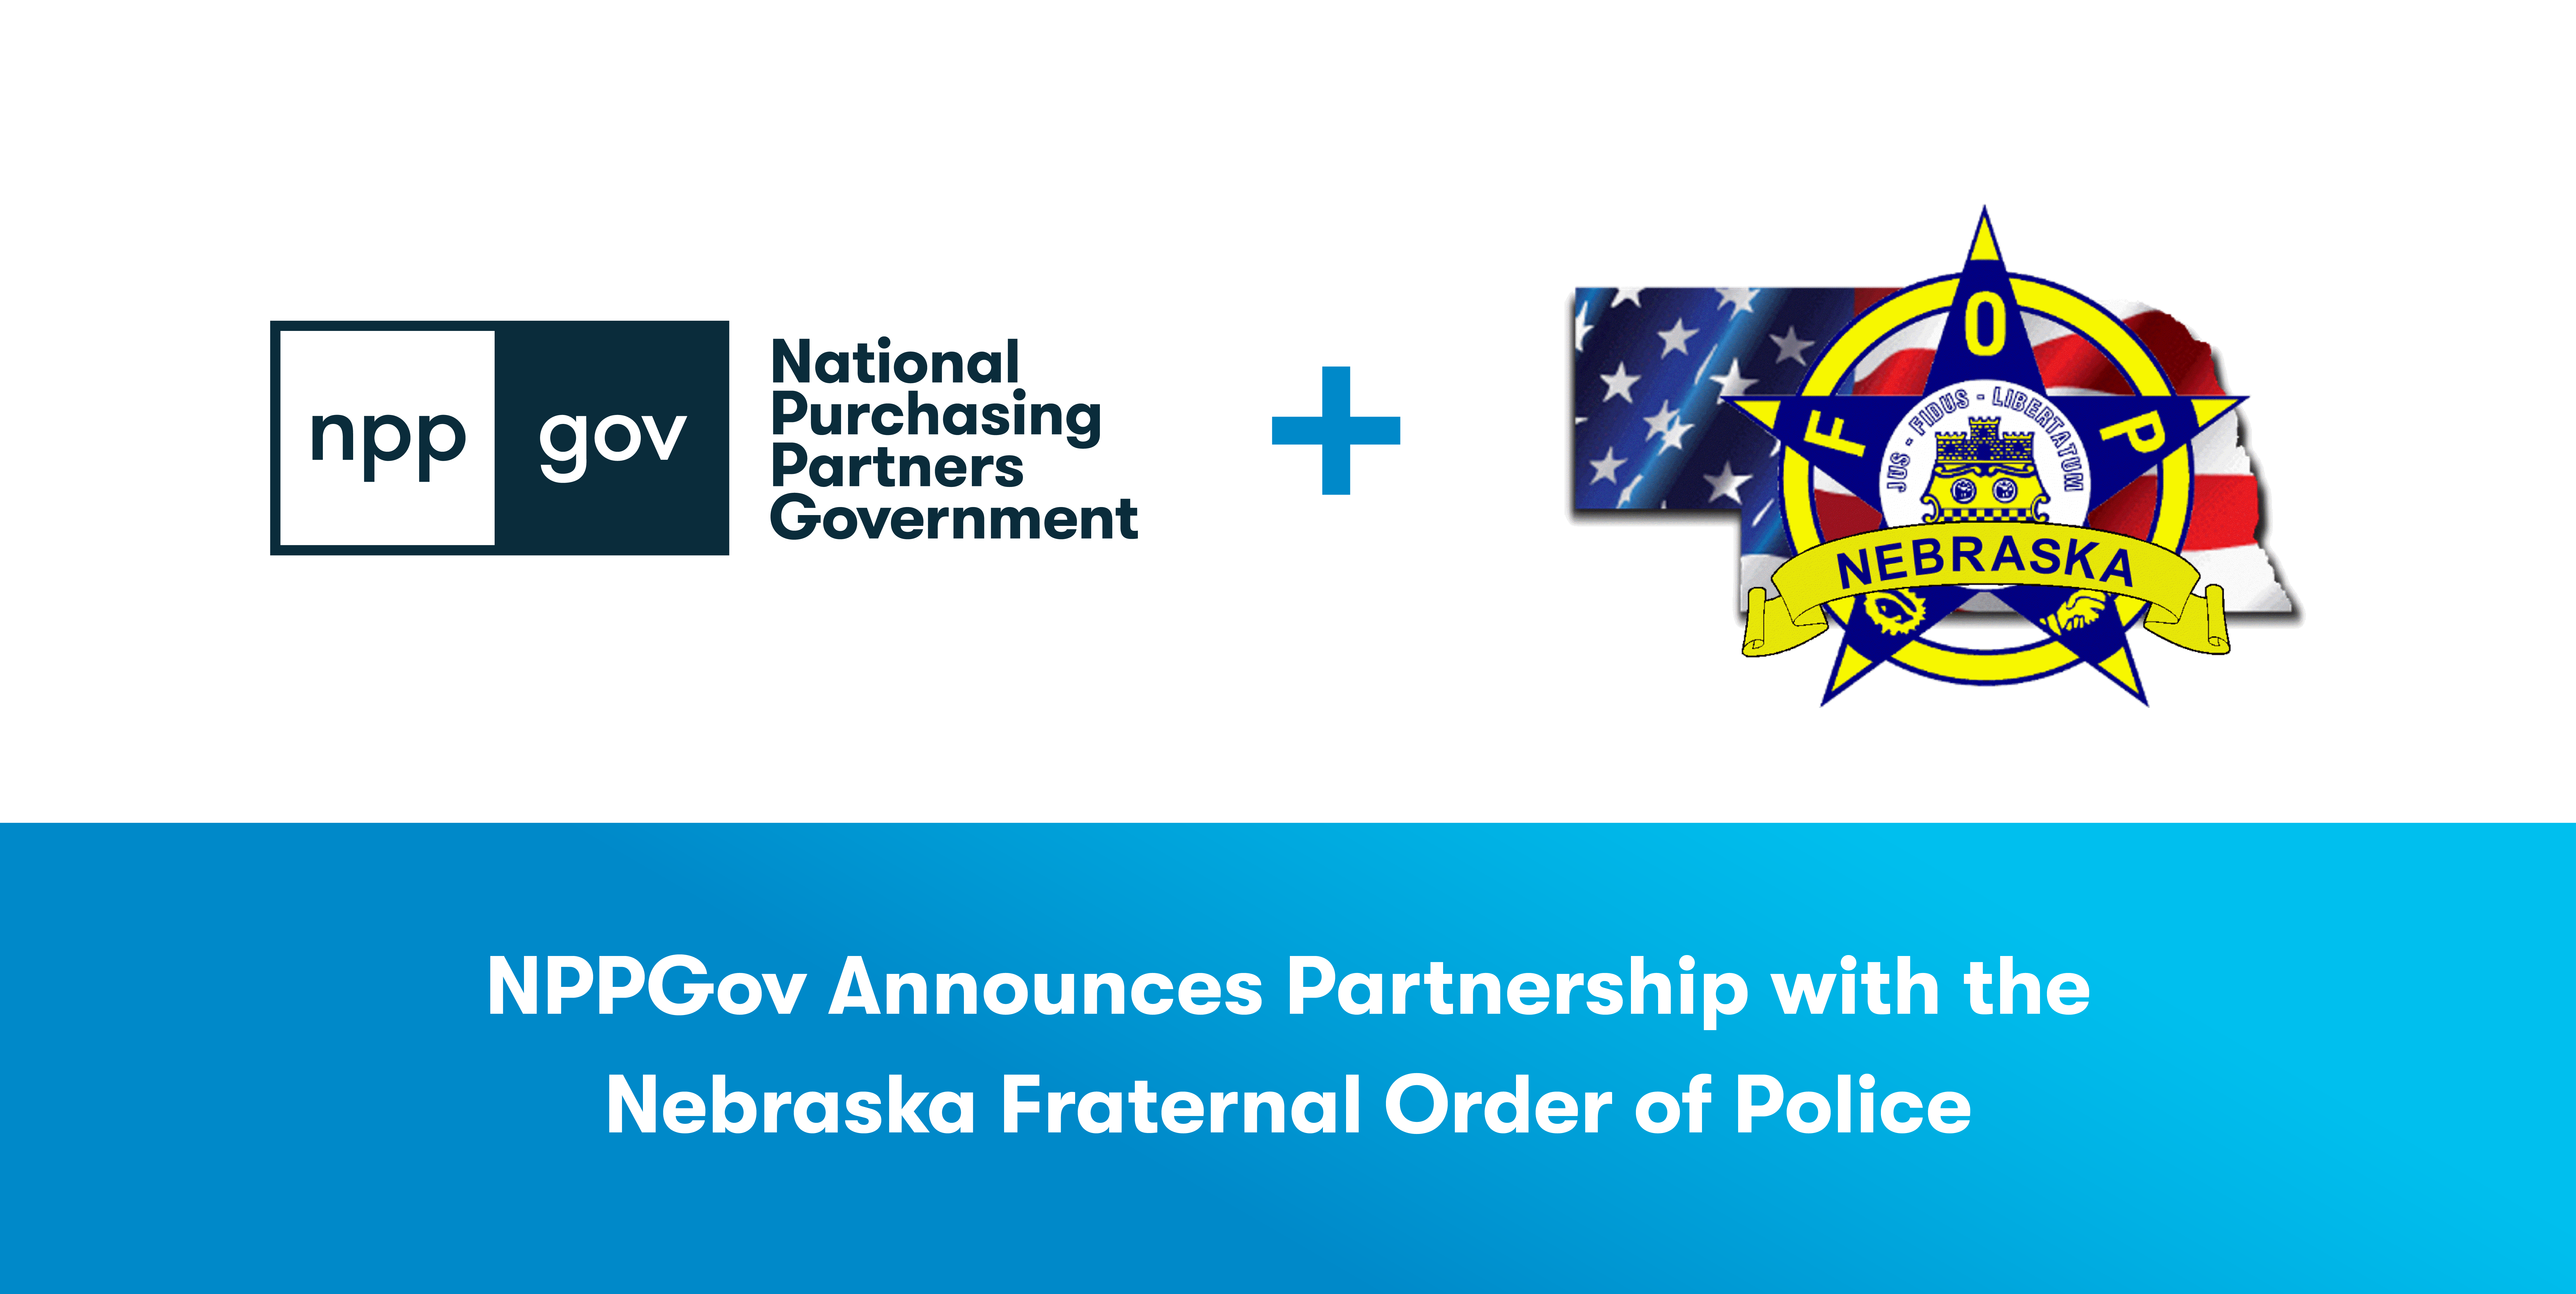 NPPGov Public Safety GPO Partners with the Nebraska Fraternal Order of Police